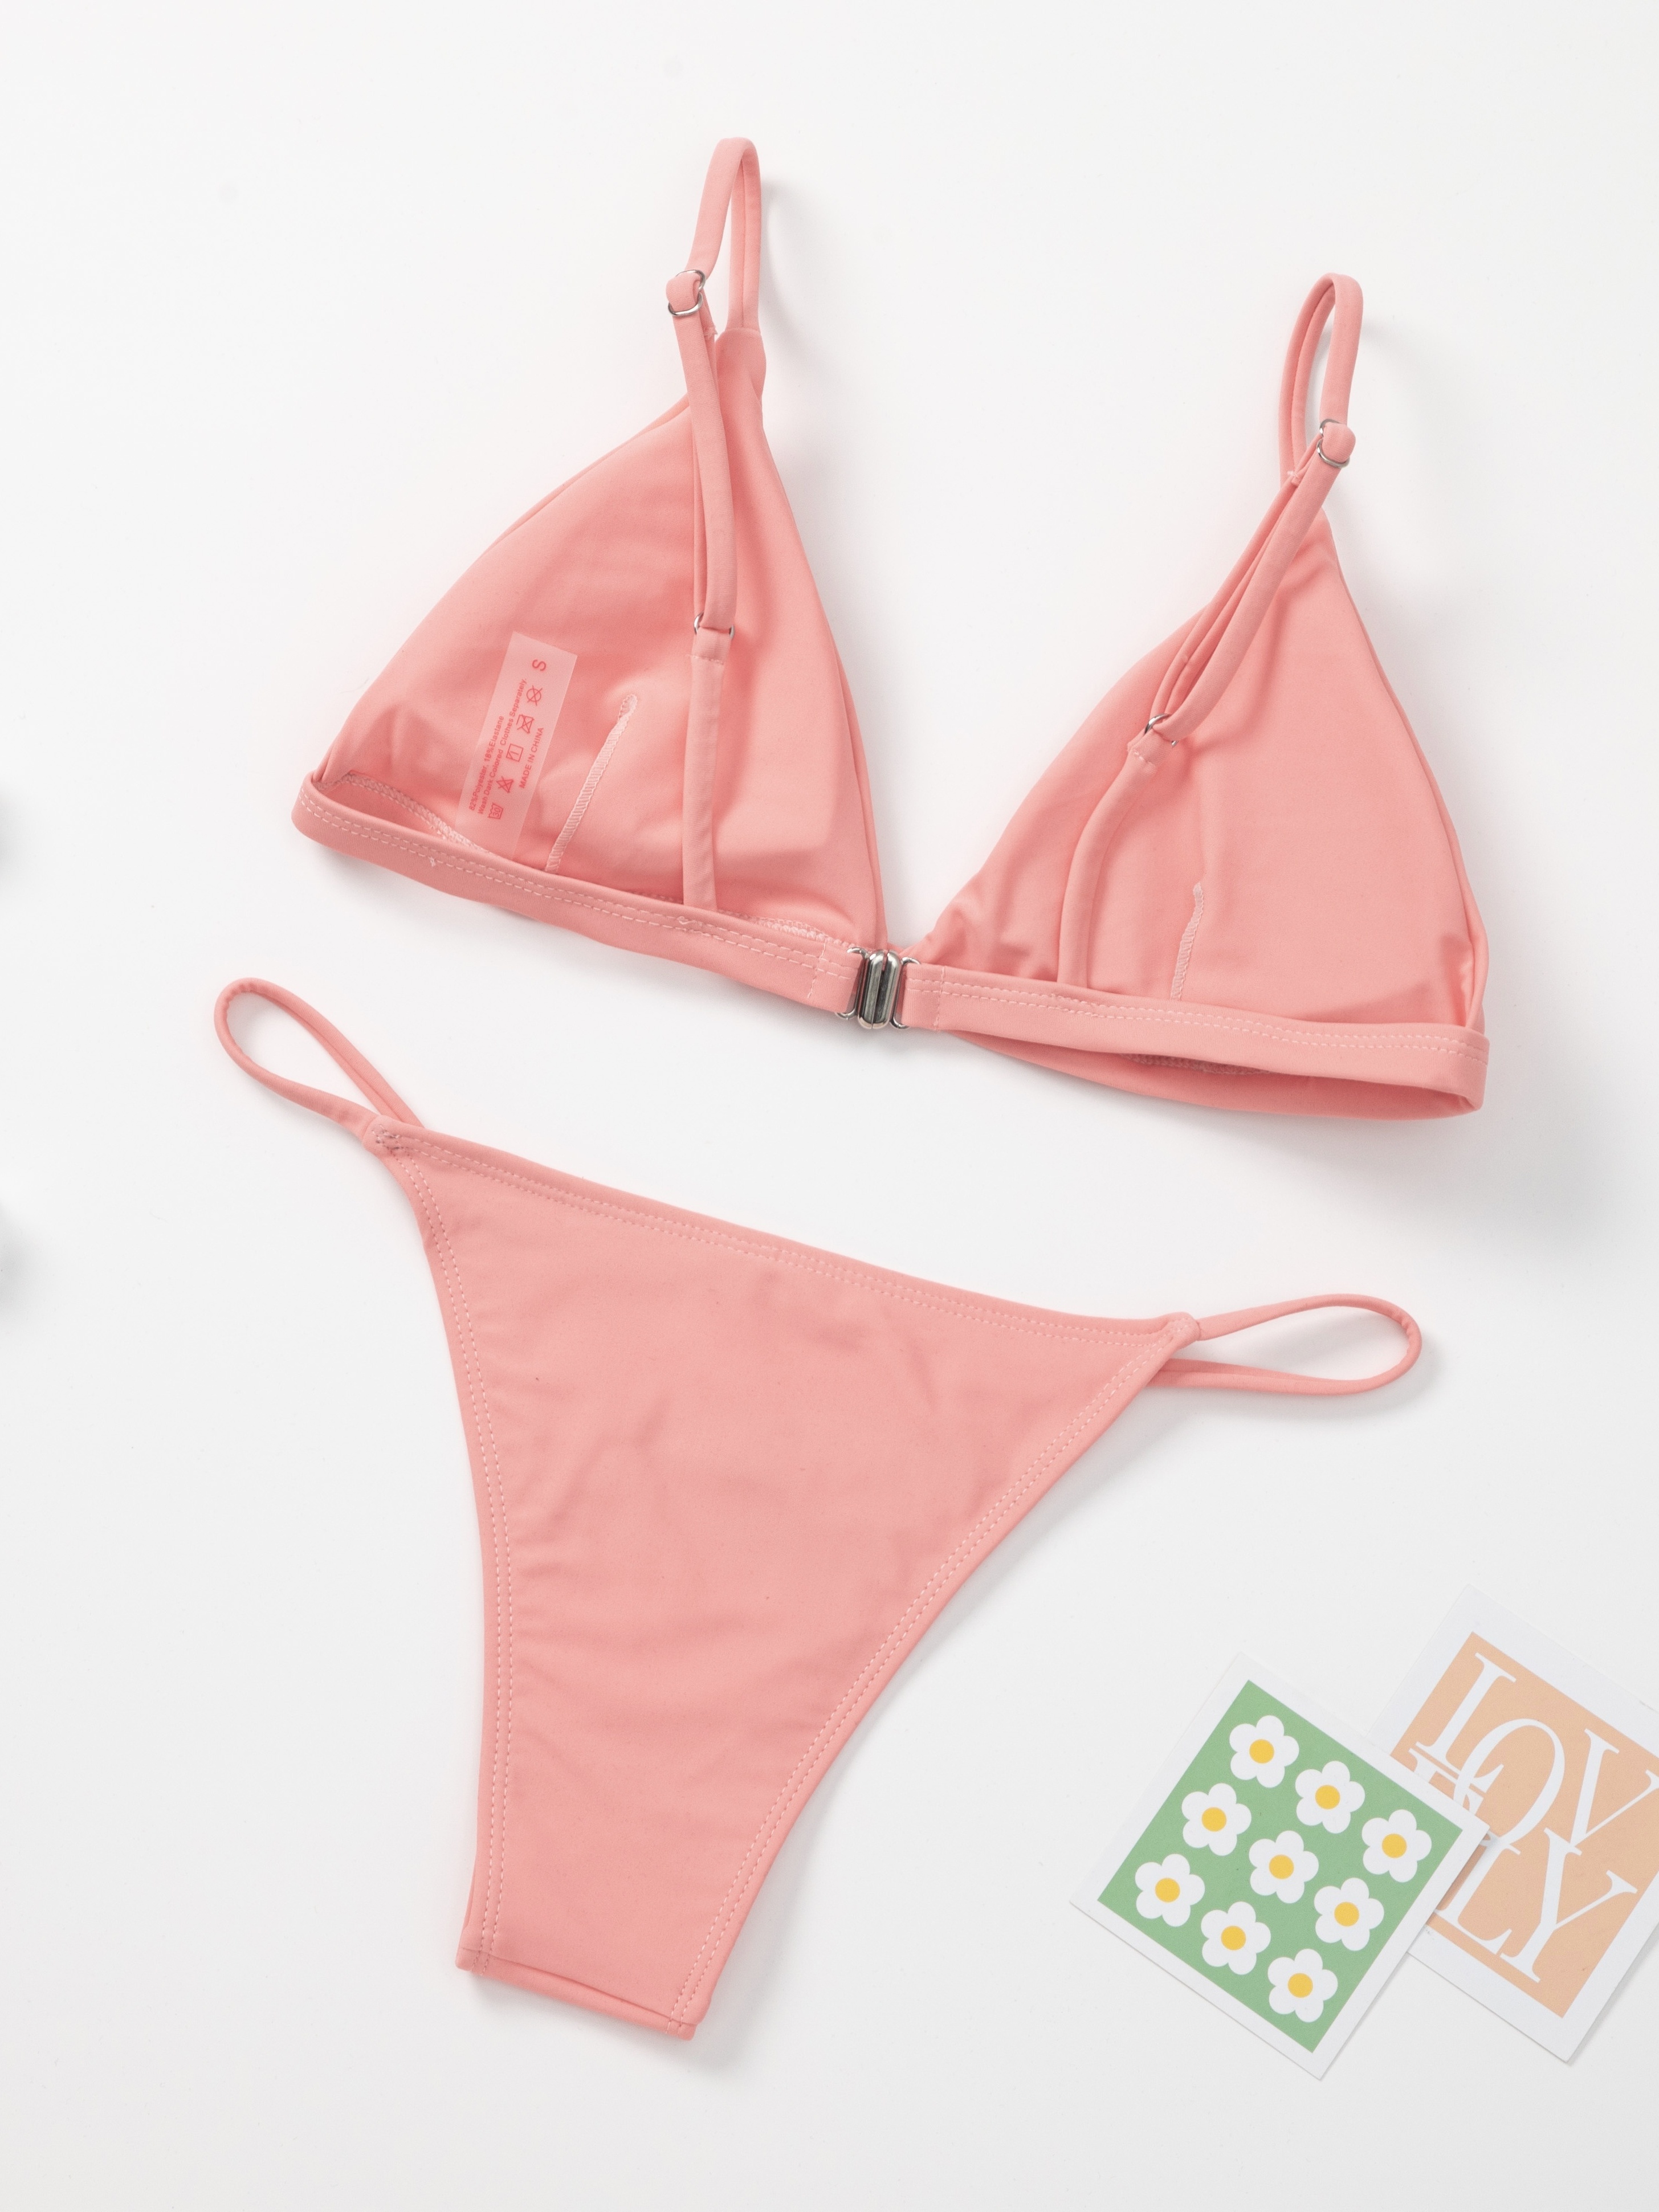  Anjikang Women's Spaghetti Straps Triangle Bikini Set